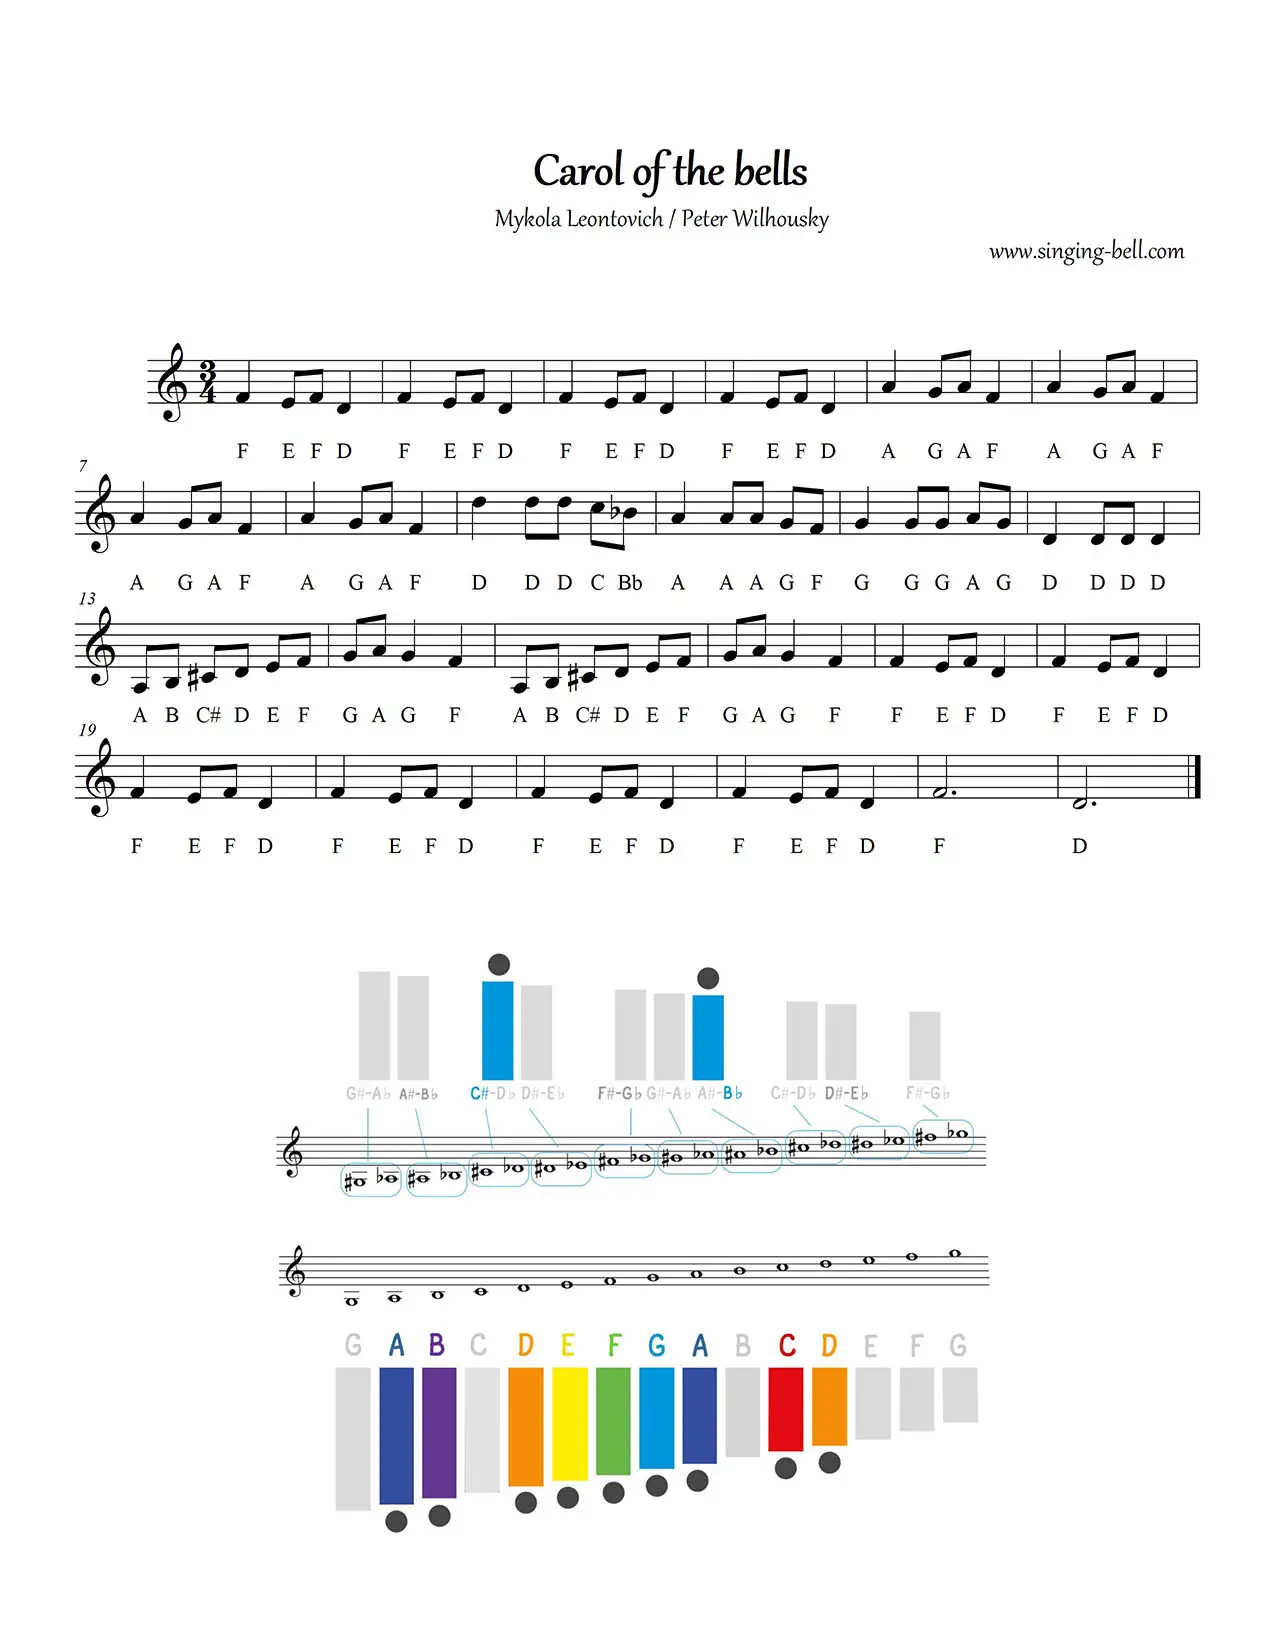 Carol of the bells free glockenspiel sheet music notes chart pdf